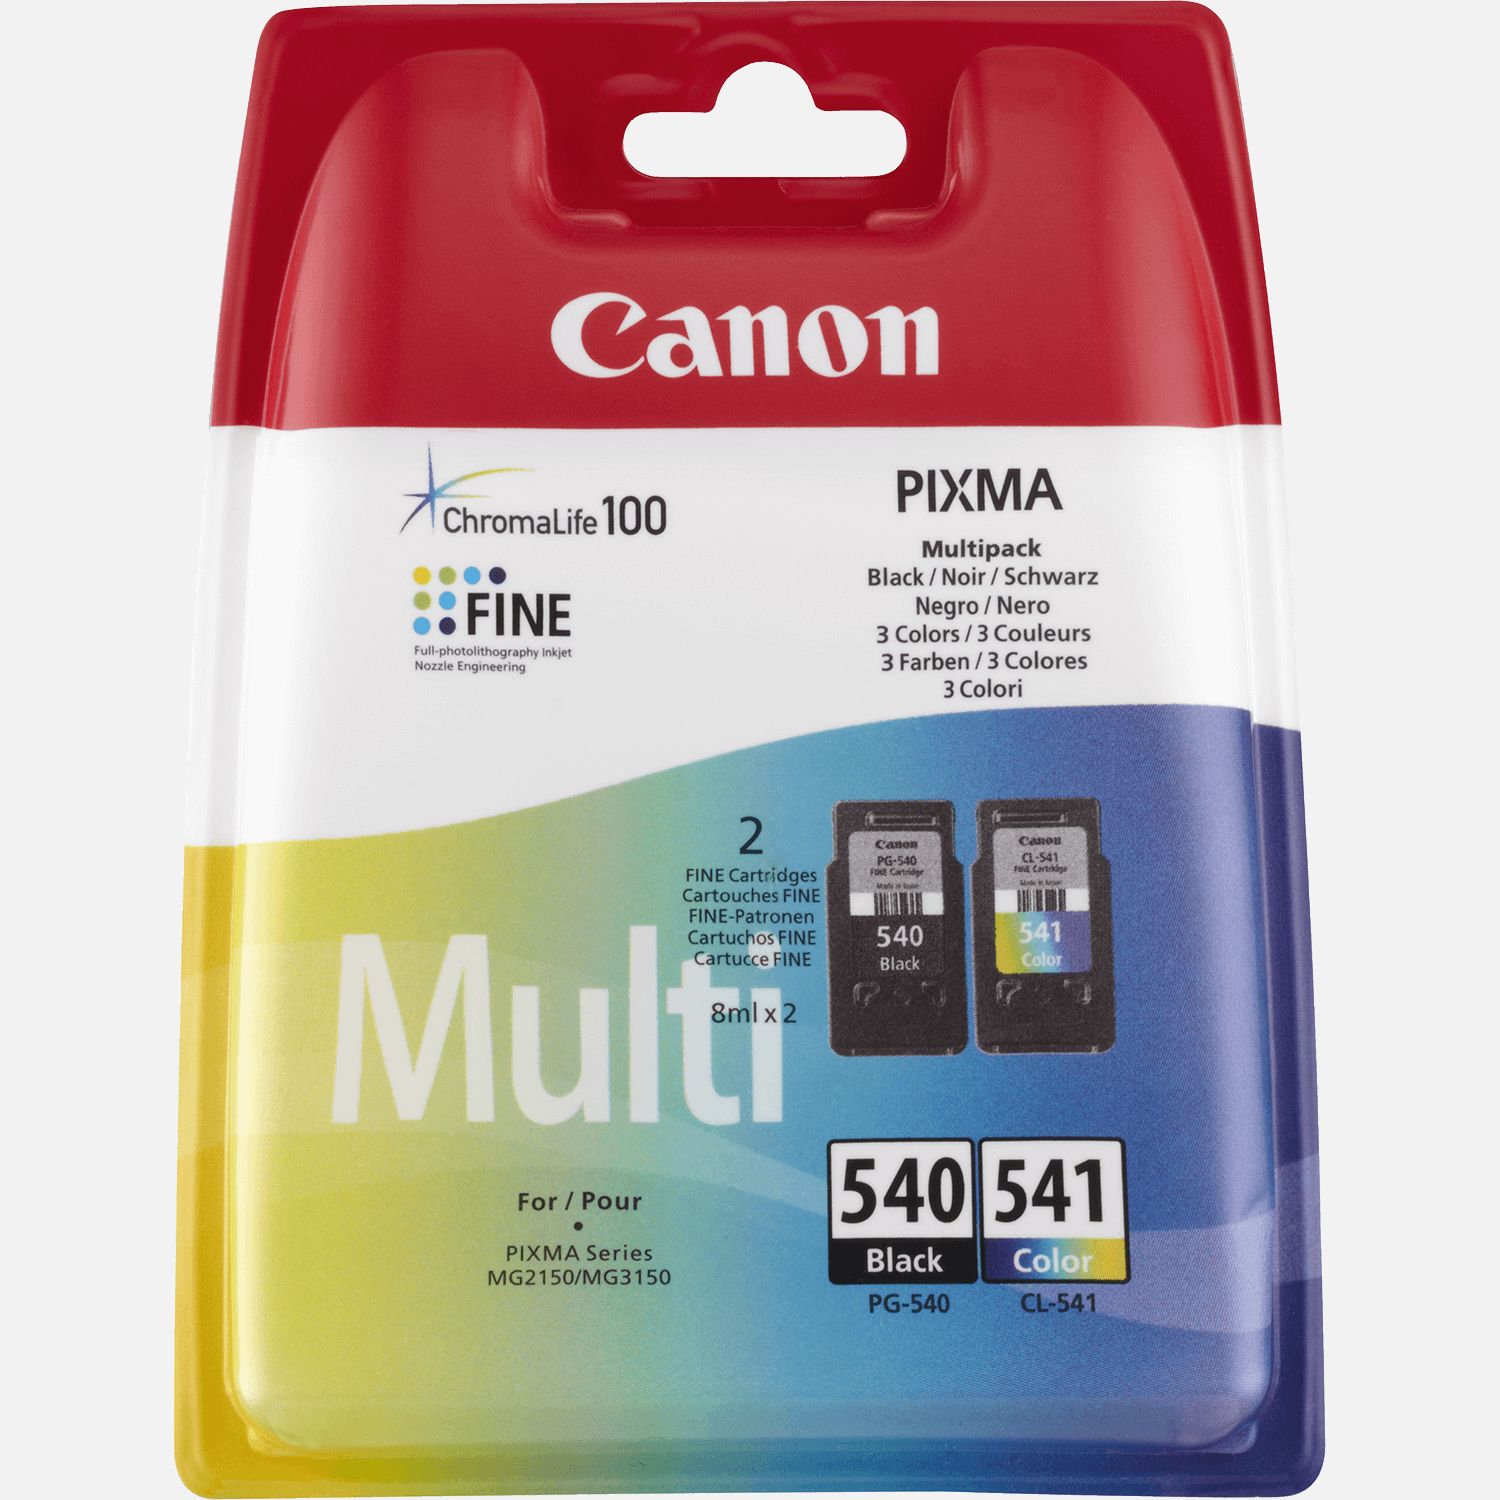 Buy Canon PIXMA MG3650S All-In-One inkjet printer, Black — Canon Sweden  Store